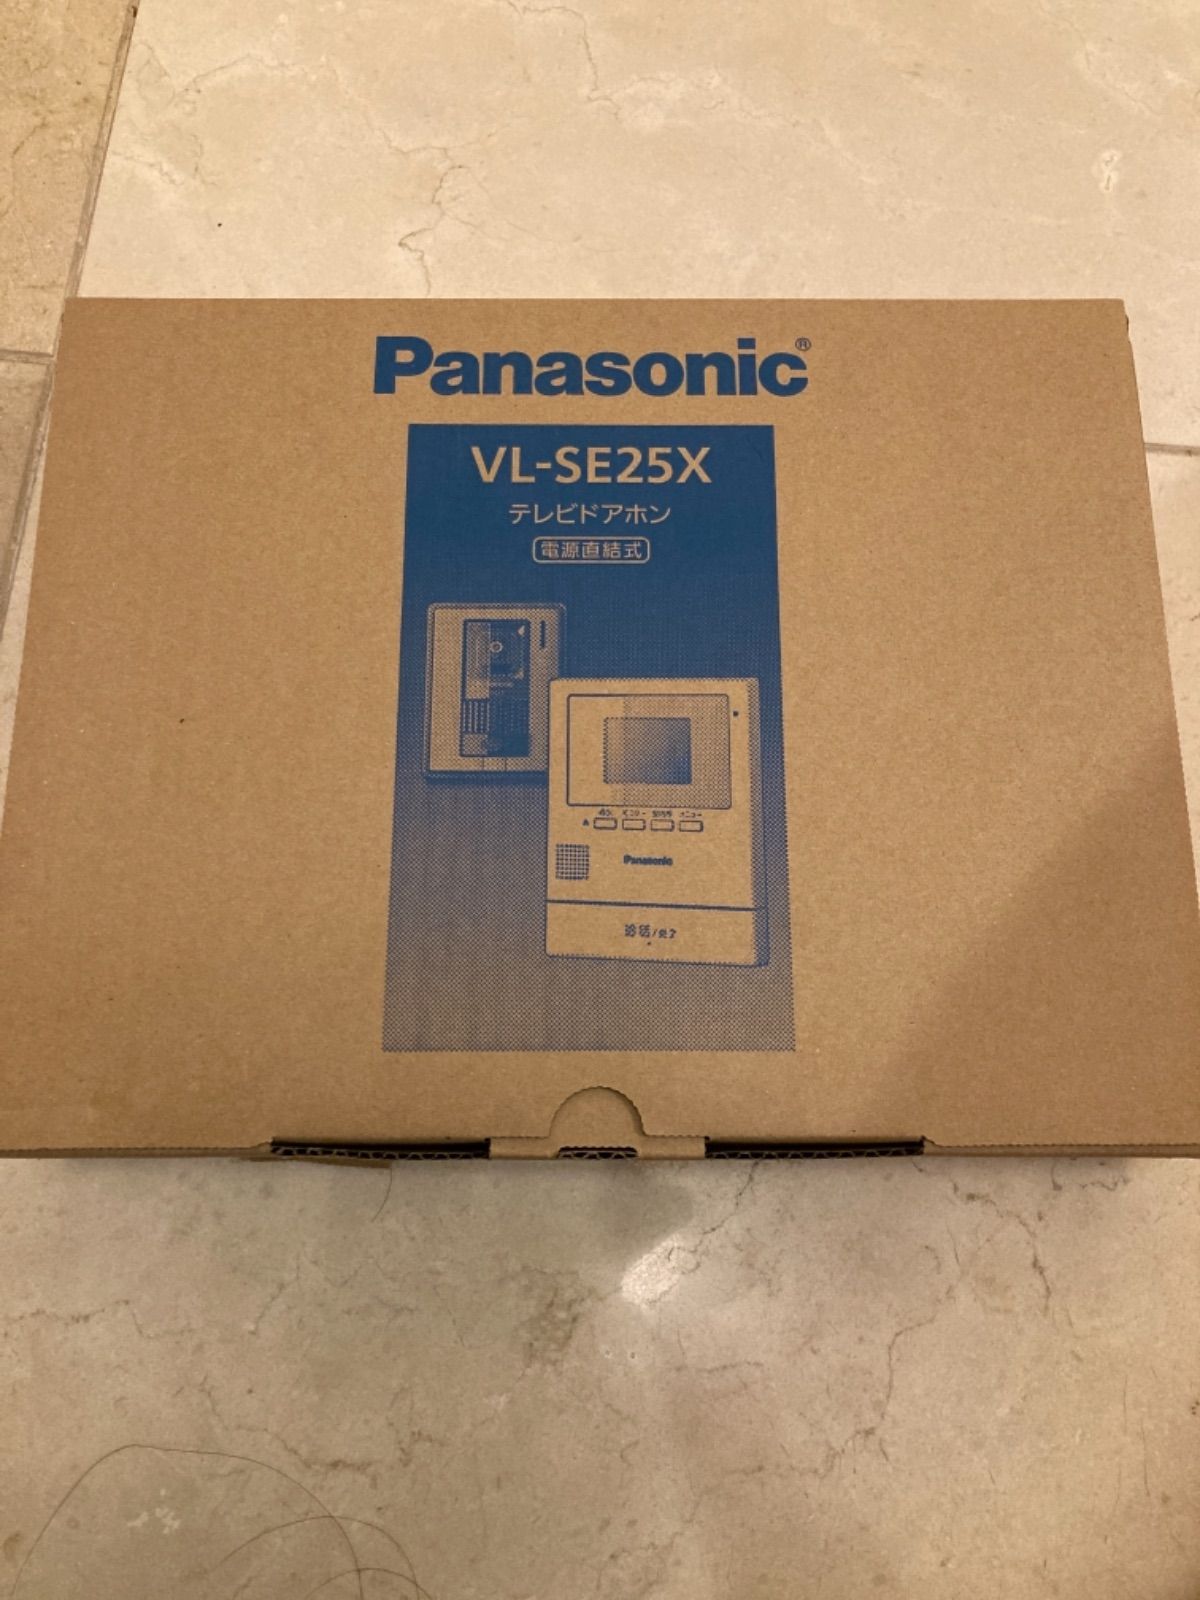 Panasonic VL-SE25X - にこりショップ - メルカリ